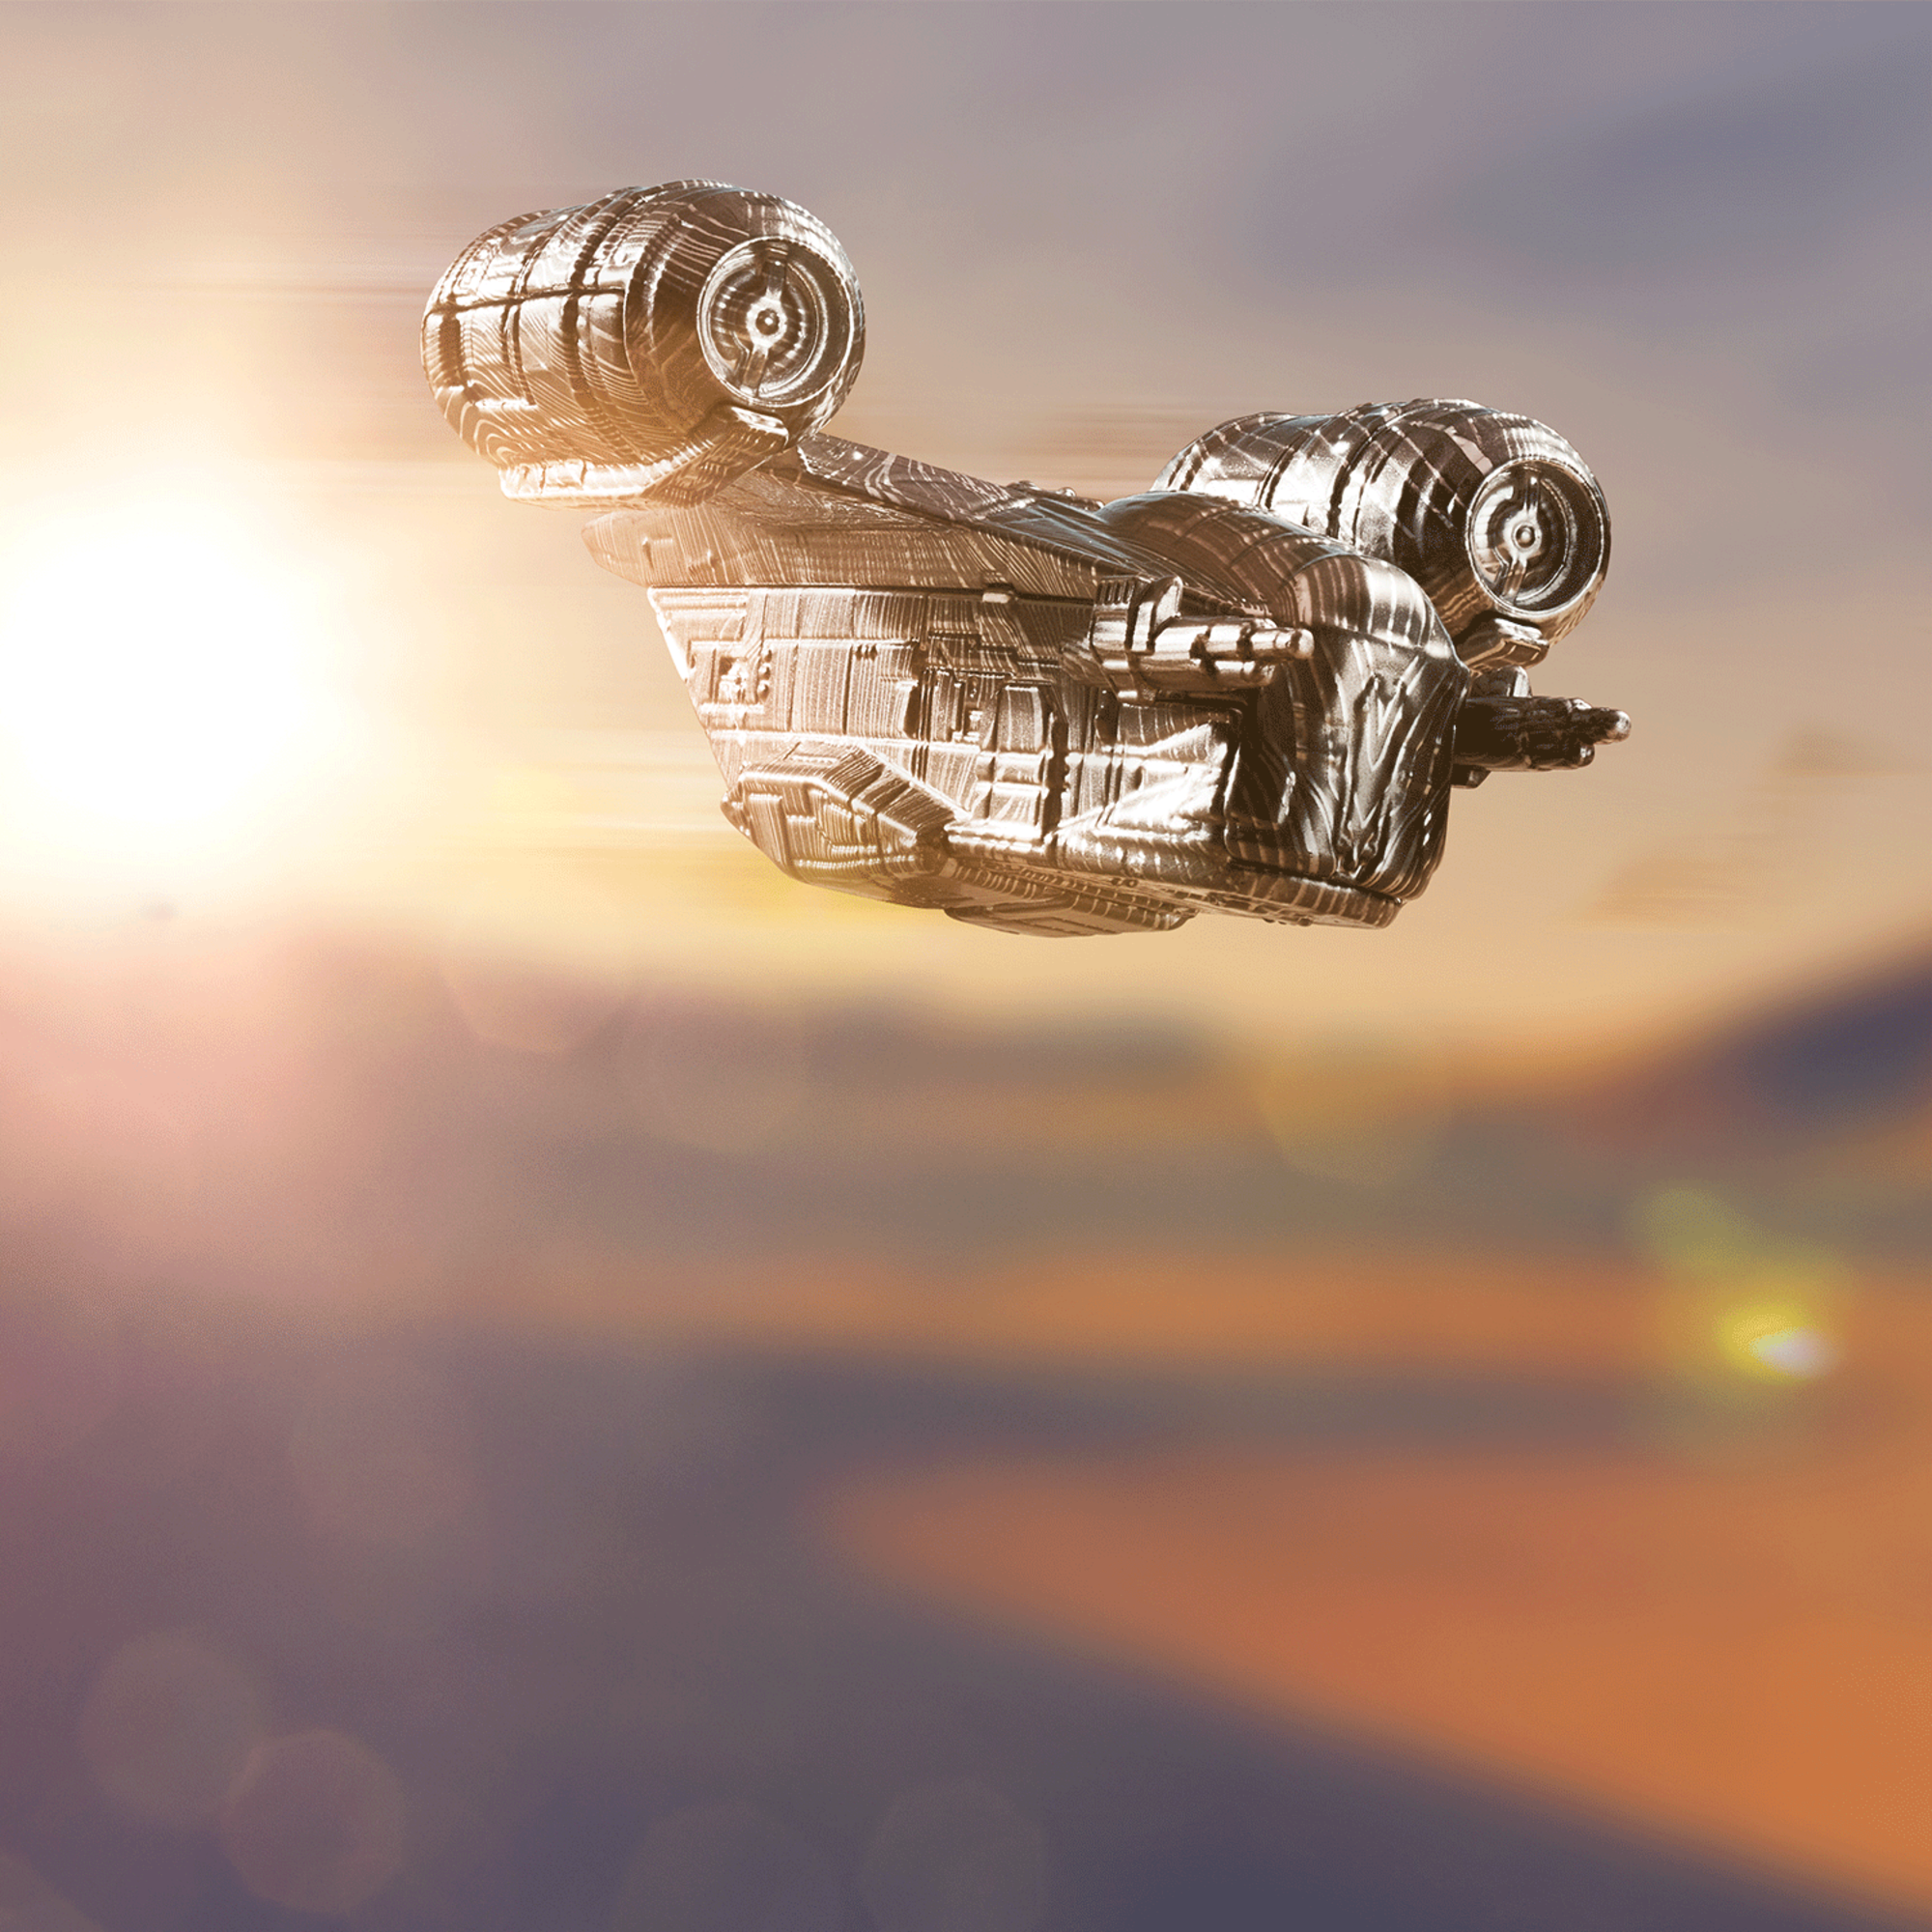 Hot Wheels Star Wars Razor Crest Starship